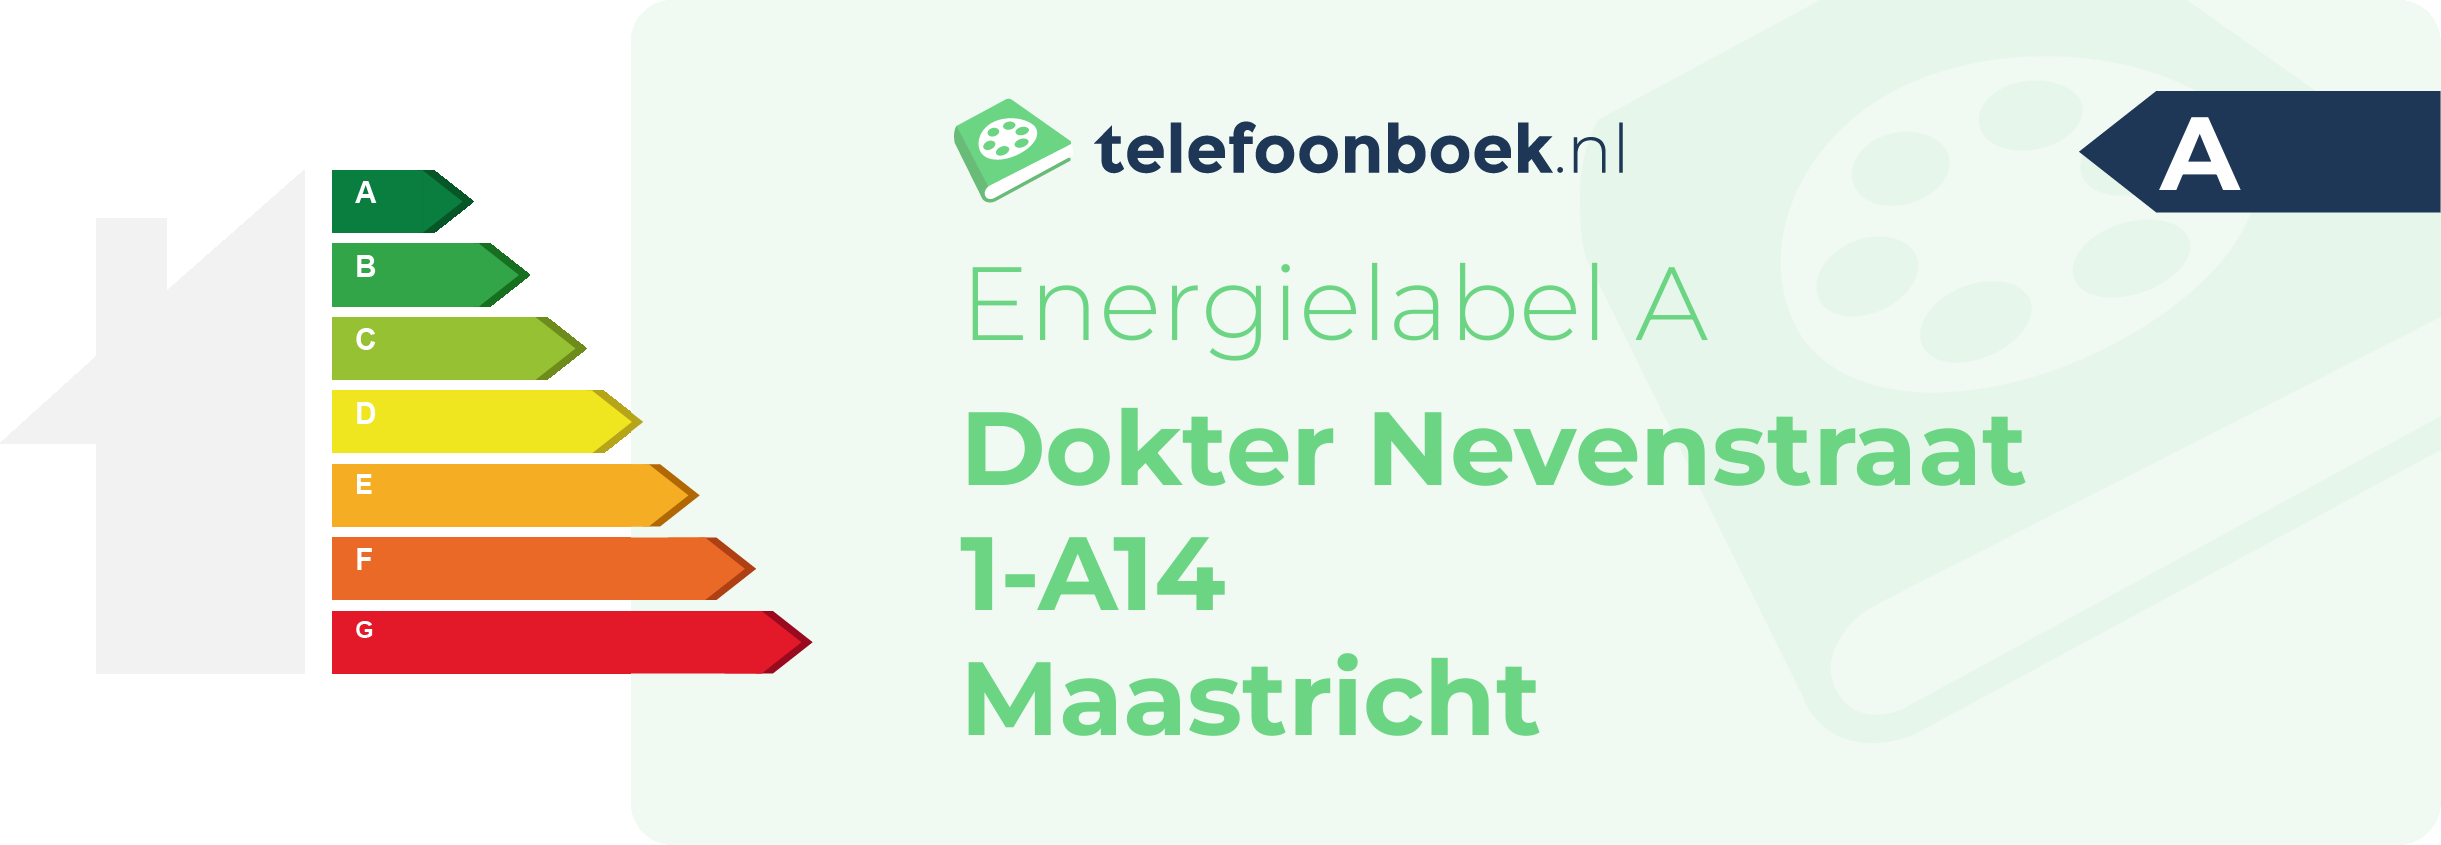 Energielabel Dokter Nevenstraat 1-A14 Maastricht